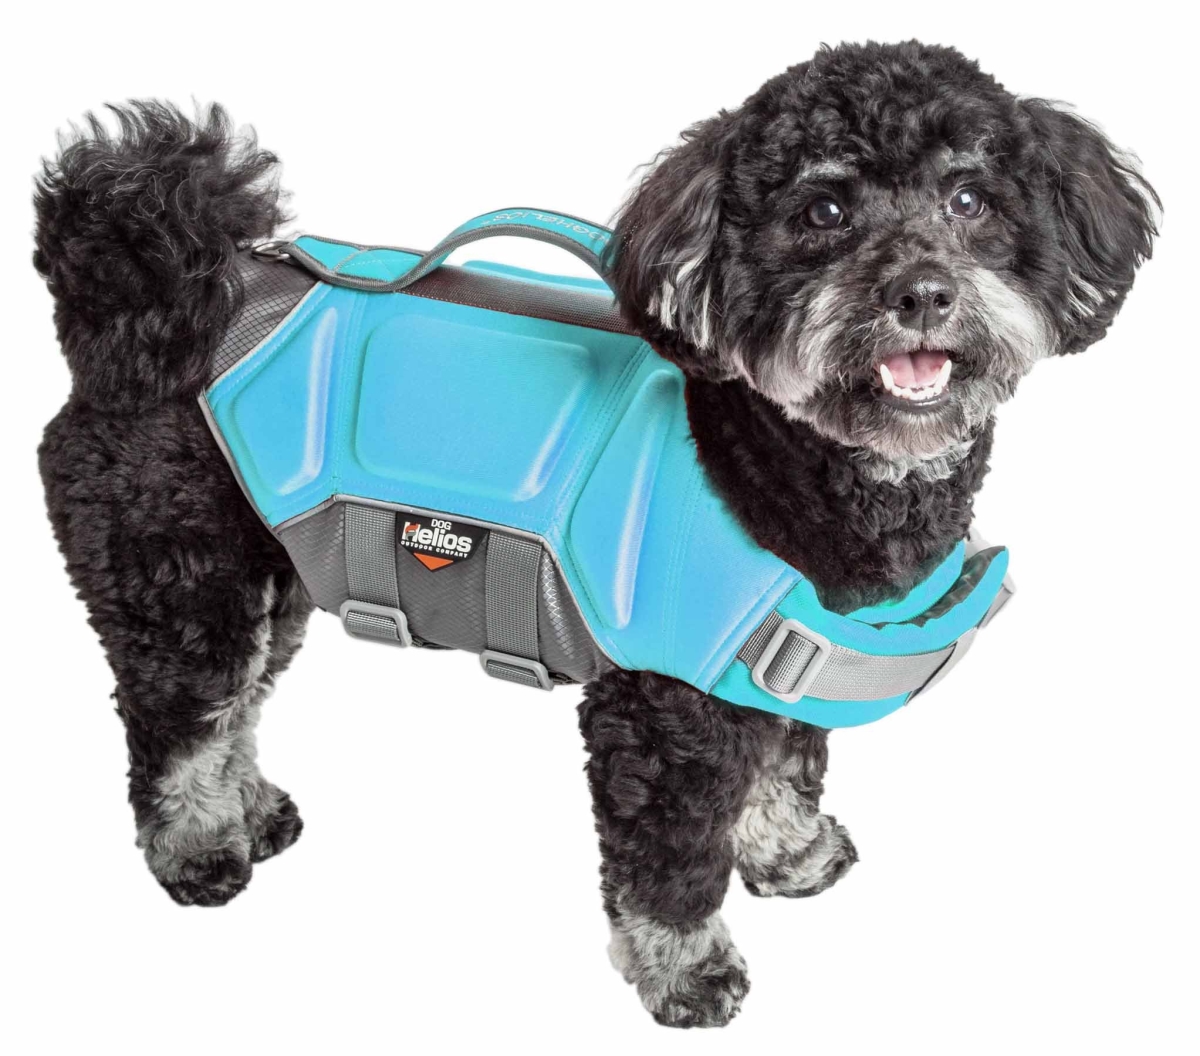 Picture of Dog Helios HA18LBXL Tidal Guard Multi-Point Strategically-Stitched Reflective Pet Dog Life Jacket Vest - Light Blue, Extra Large